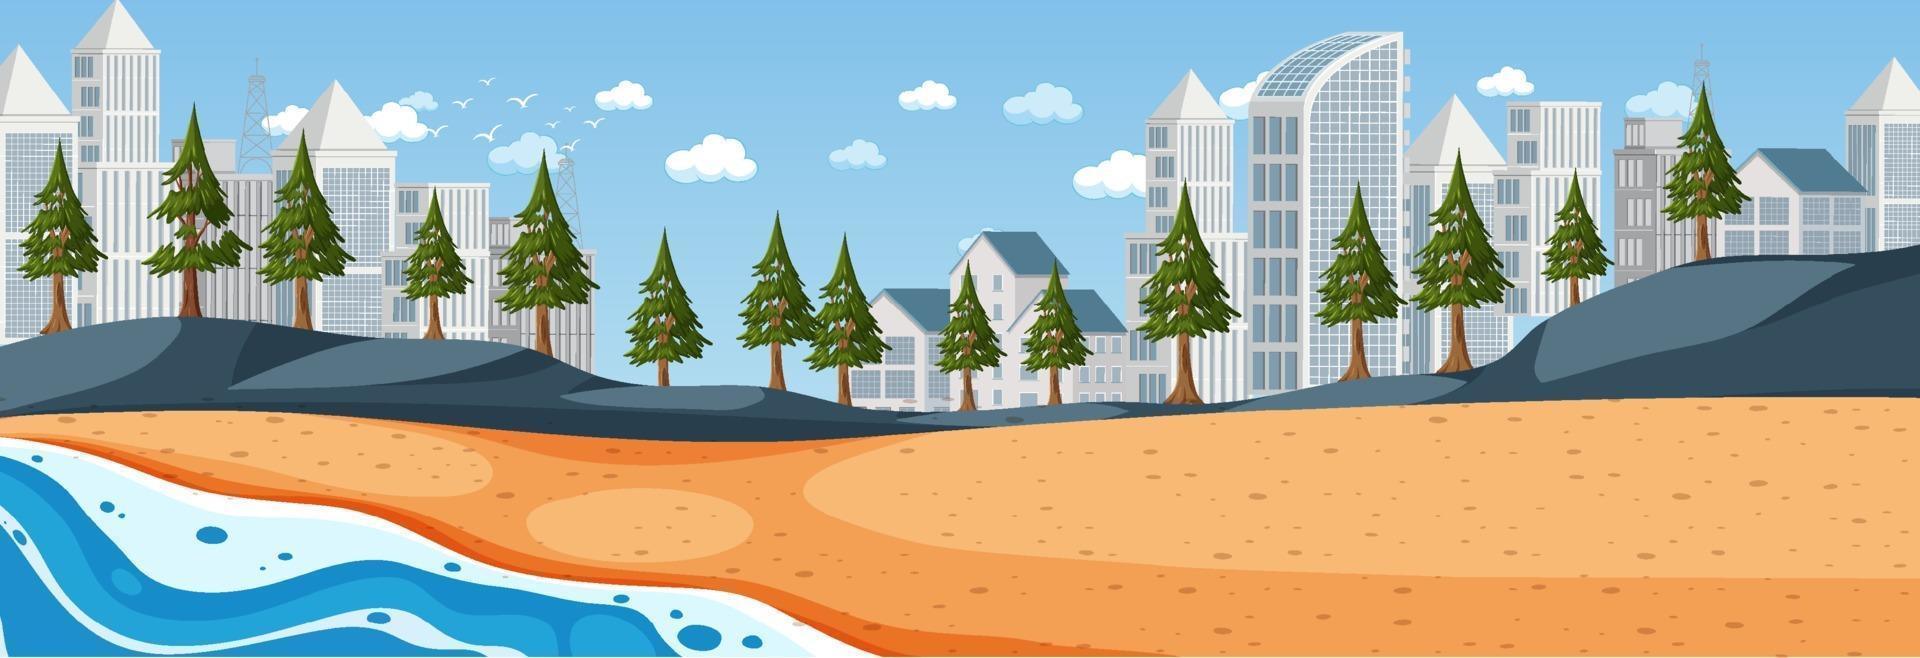 strand horizontale scène overdag met stadsgezicht achtergrond vector